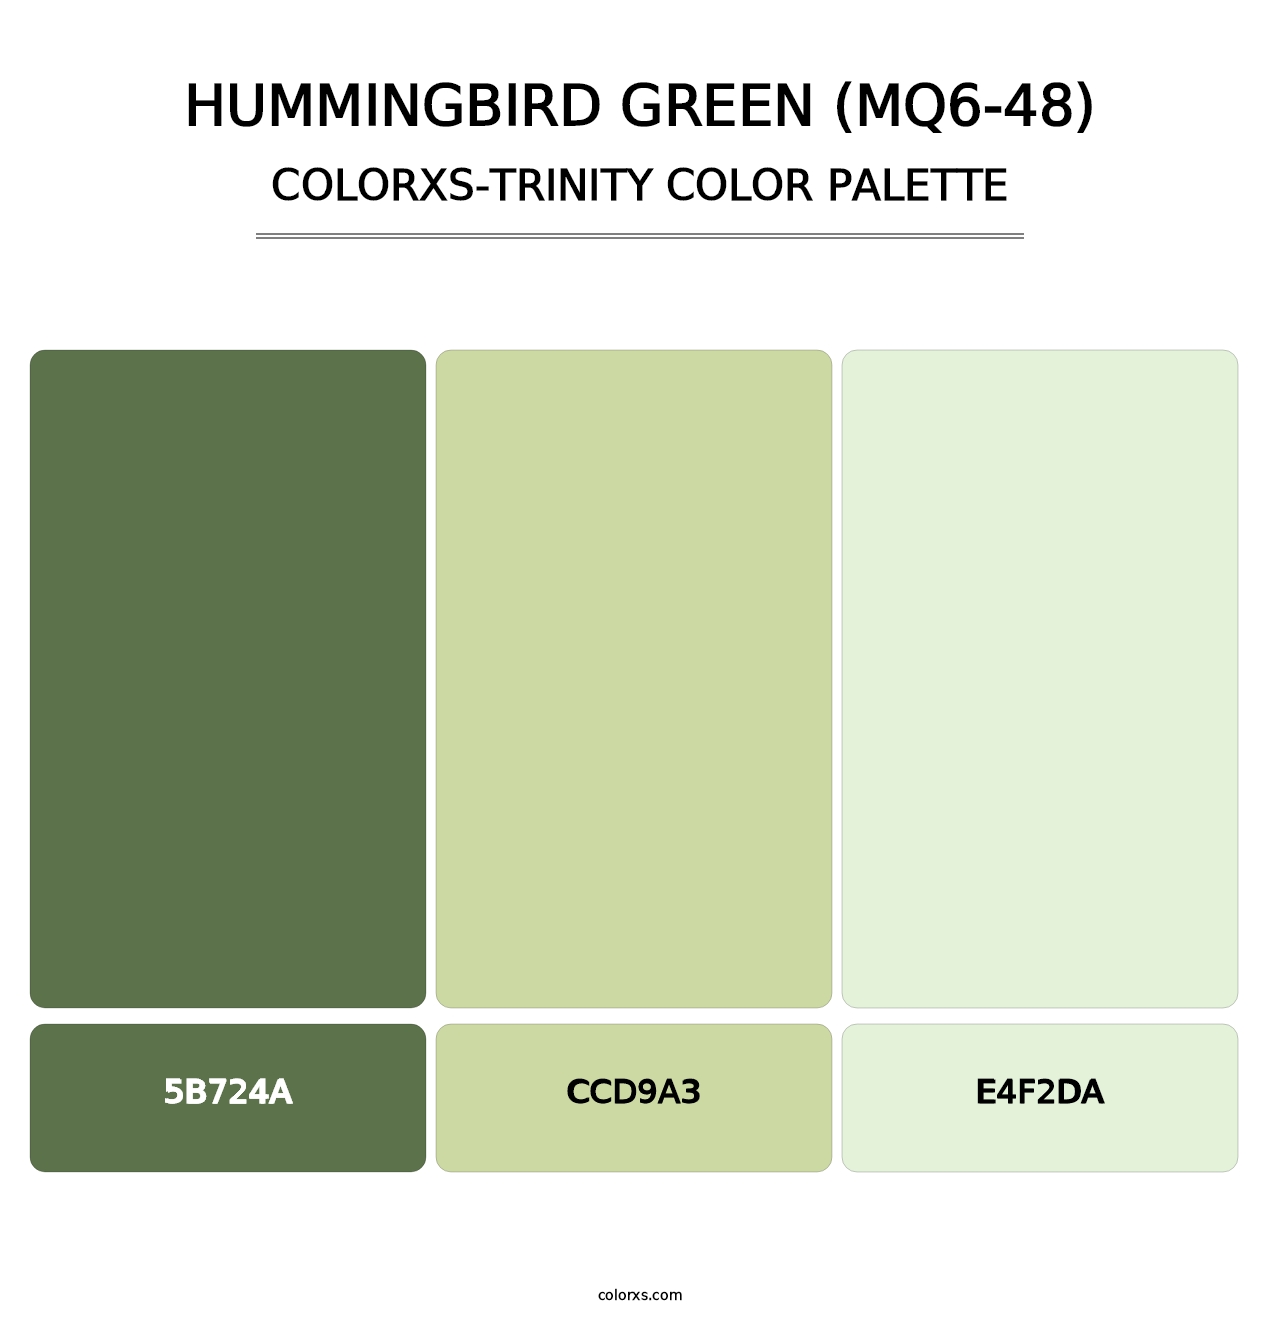 Hummingbird Green (MQ6-48) - Colorxs Trinity Palette